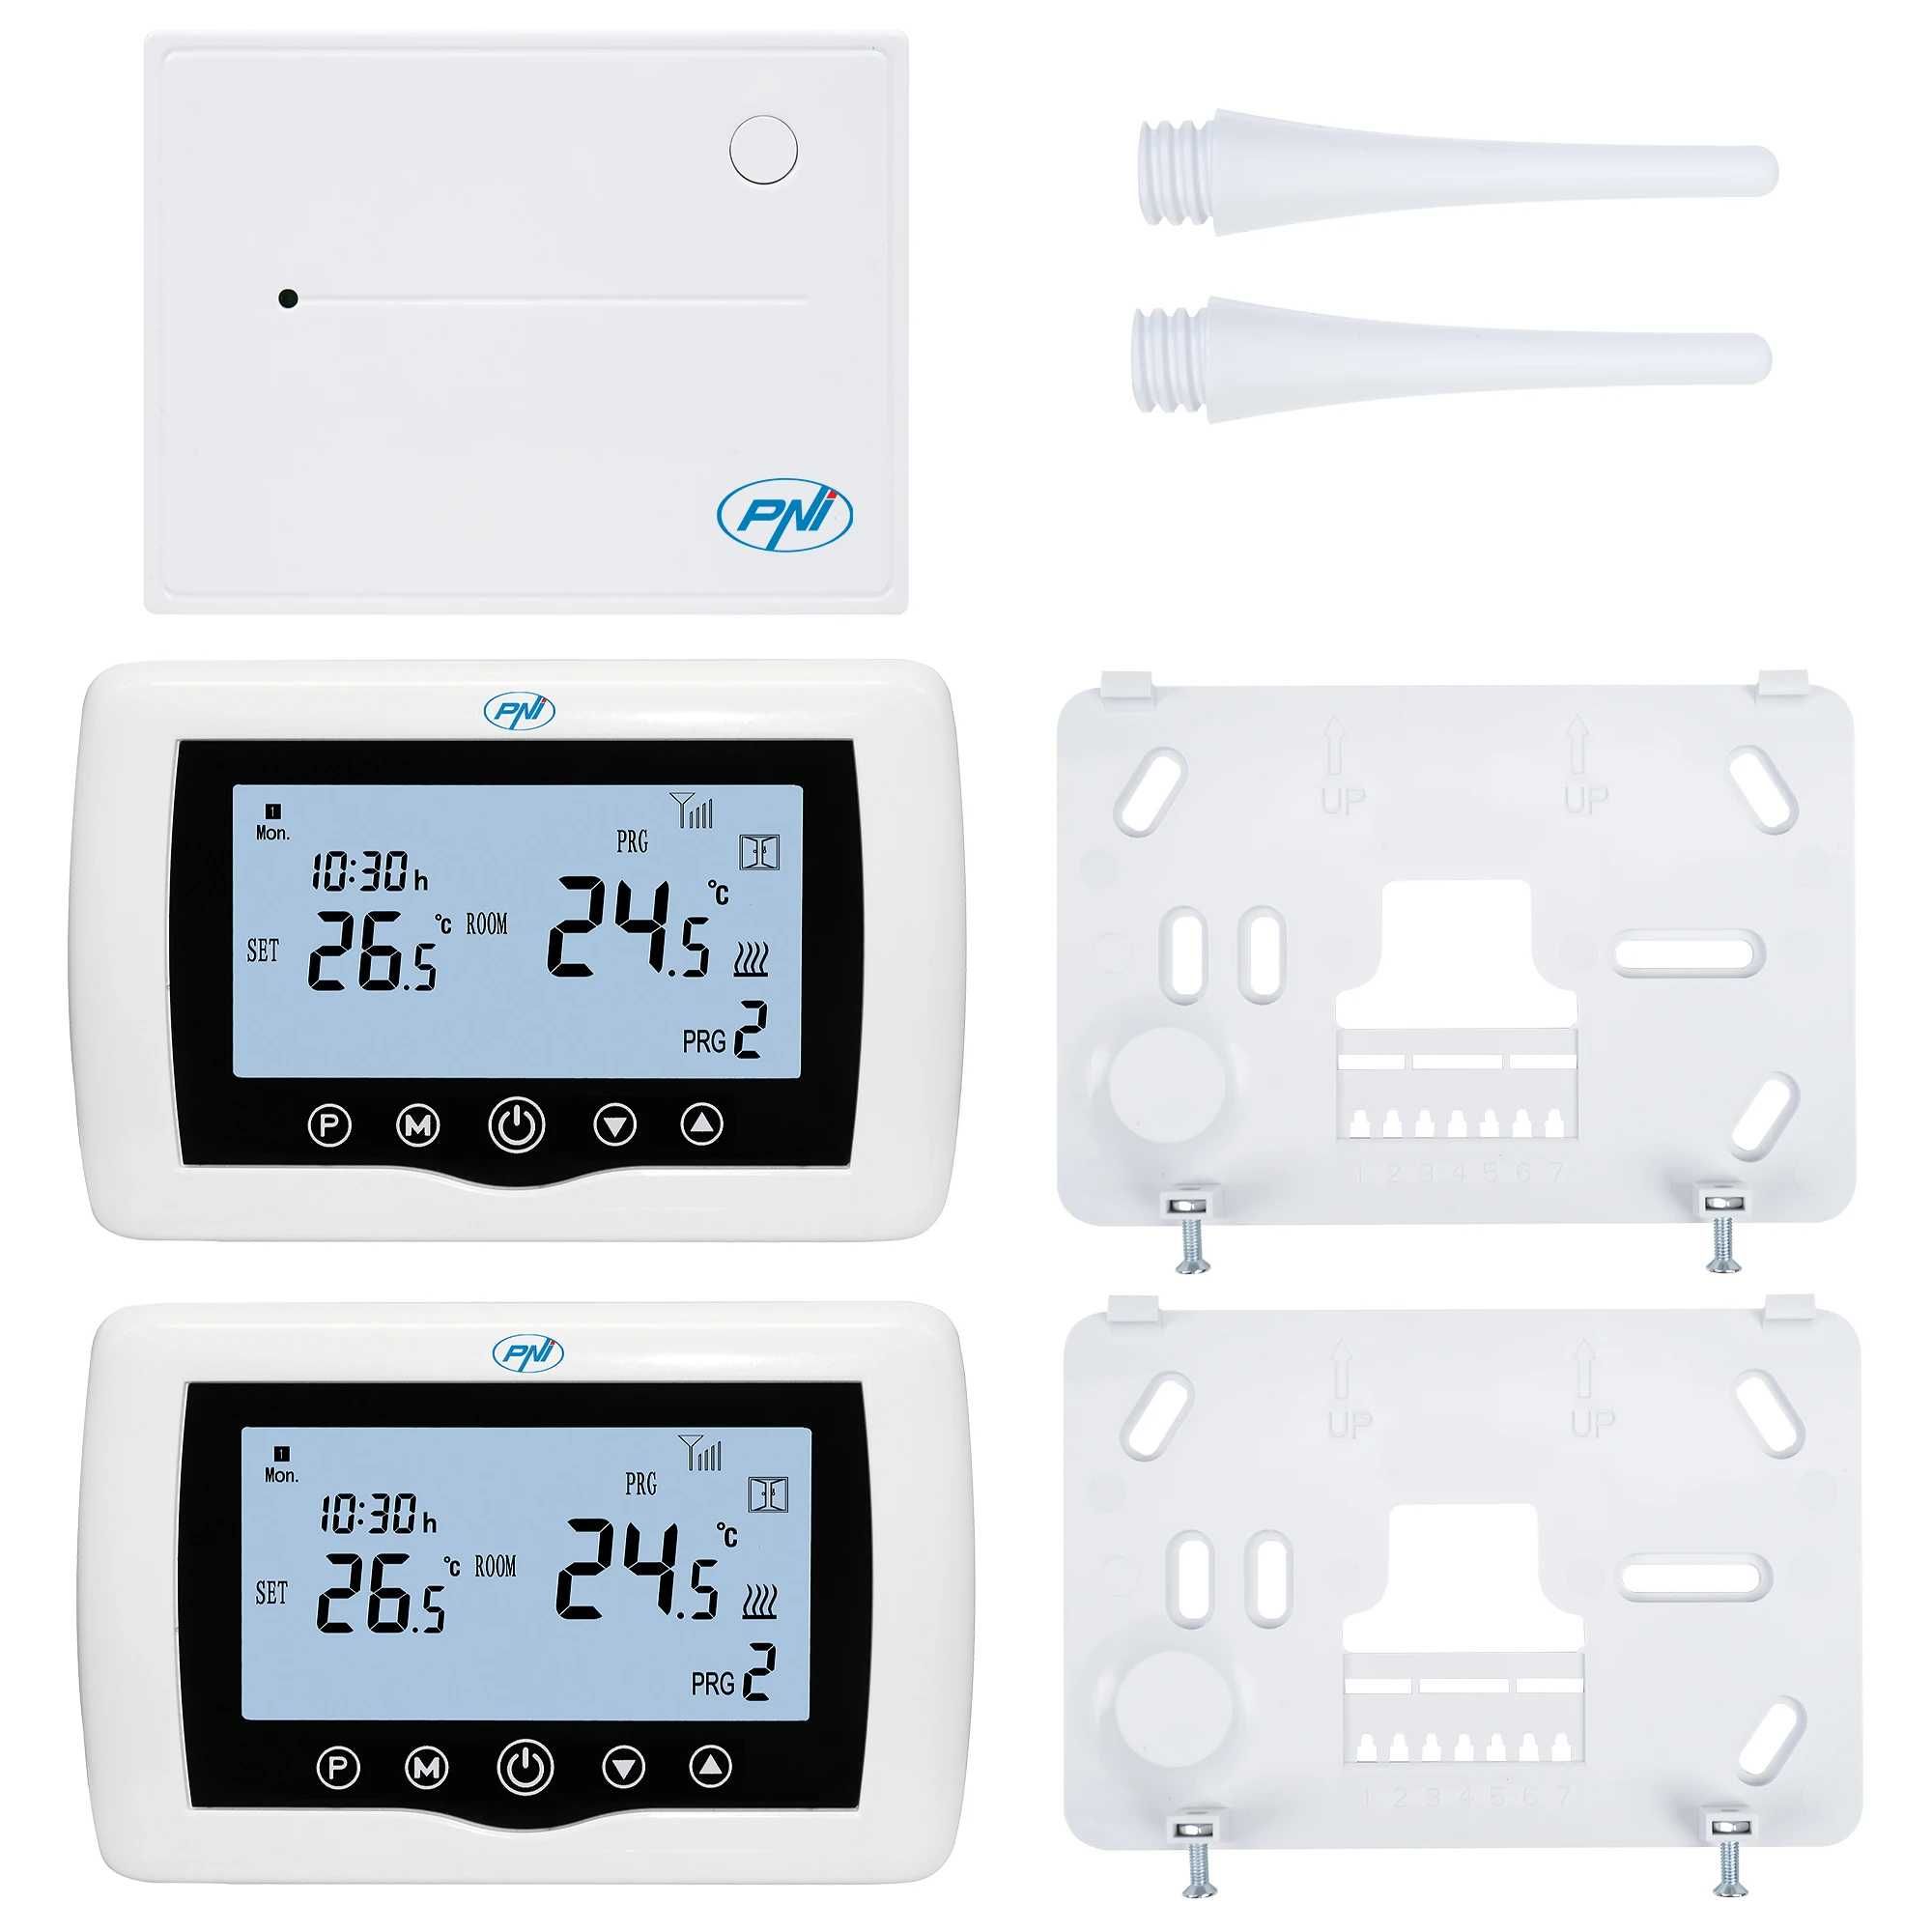 Termostat ambient dublu - WiFi - PNI CT400 - control aplicatie Tuya